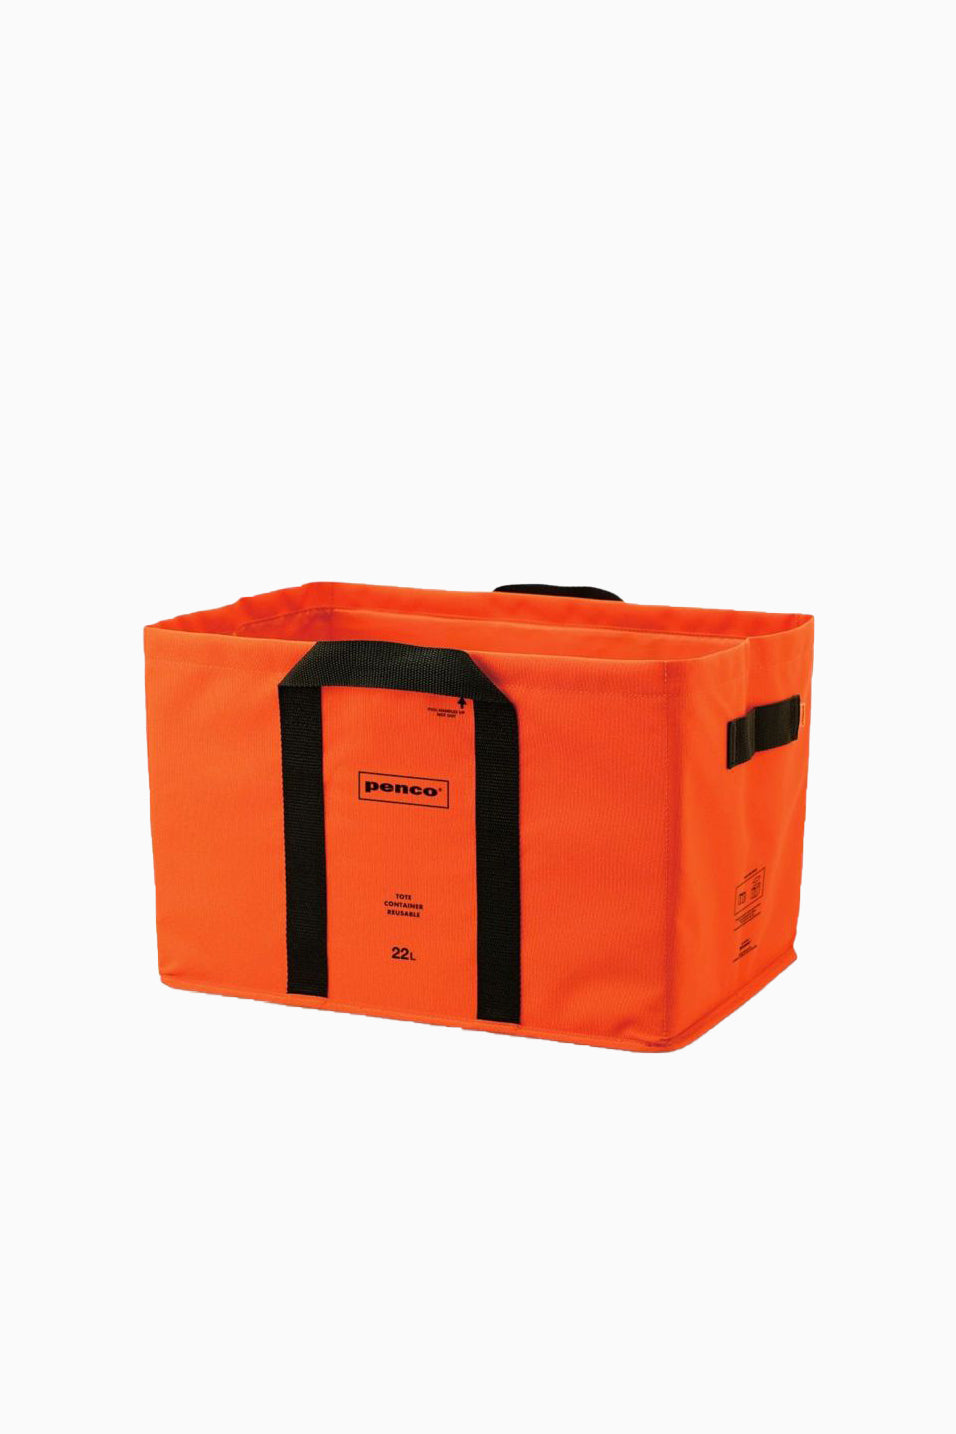 Box tote orange-Penco-[interior]-[design]-KIOSK48TH